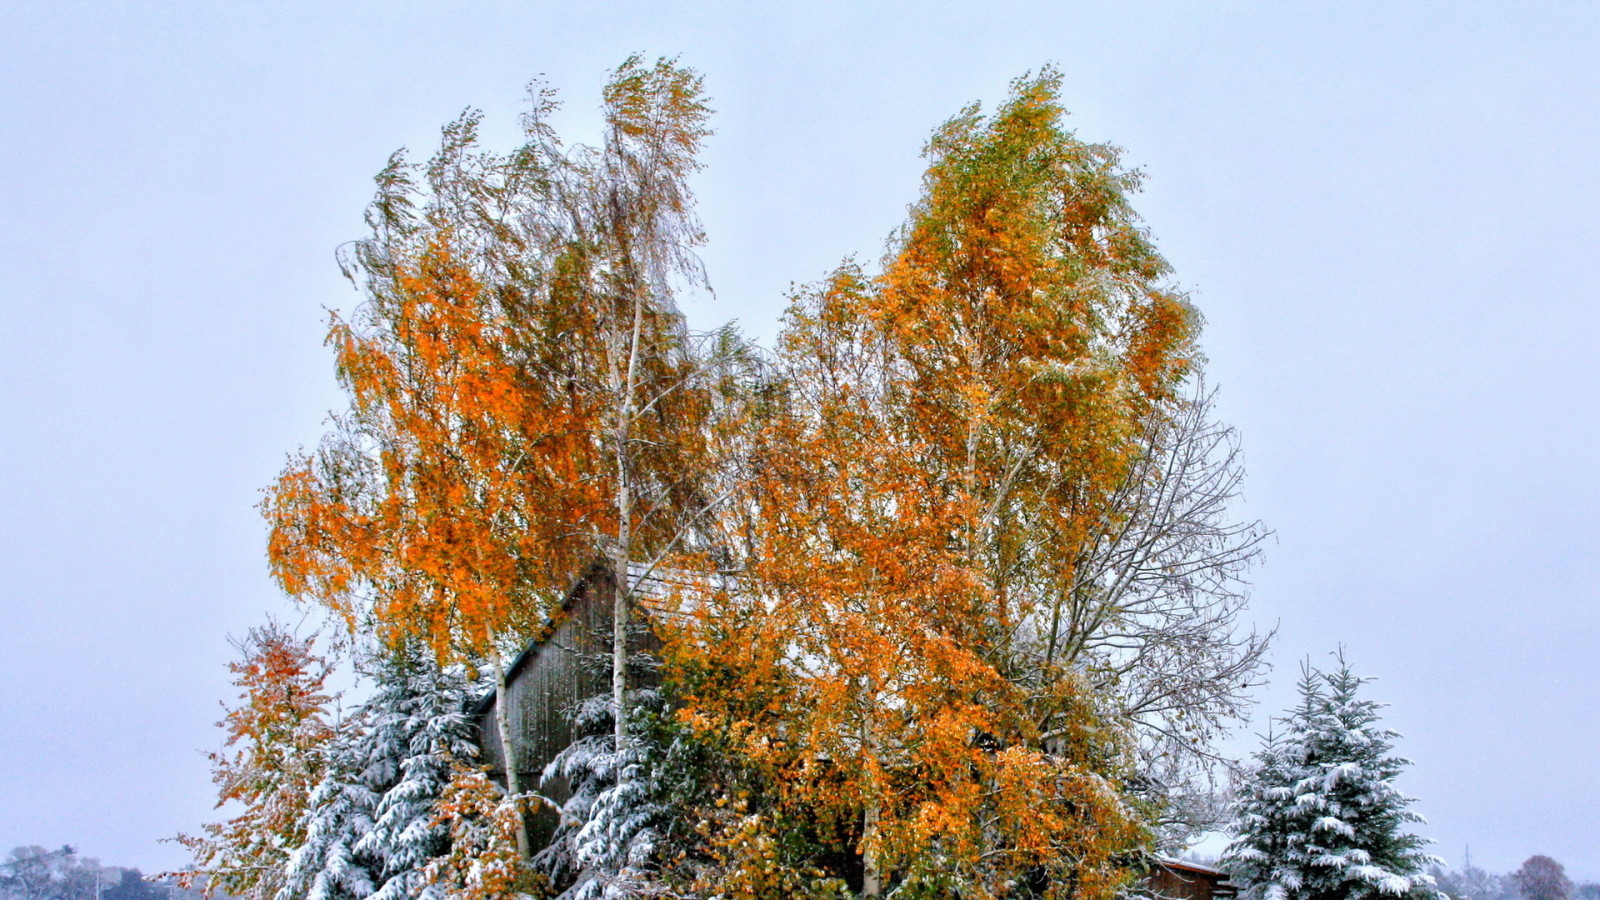 salju, musim gugur, langit, rumah, pohon, Daun-daun, atap